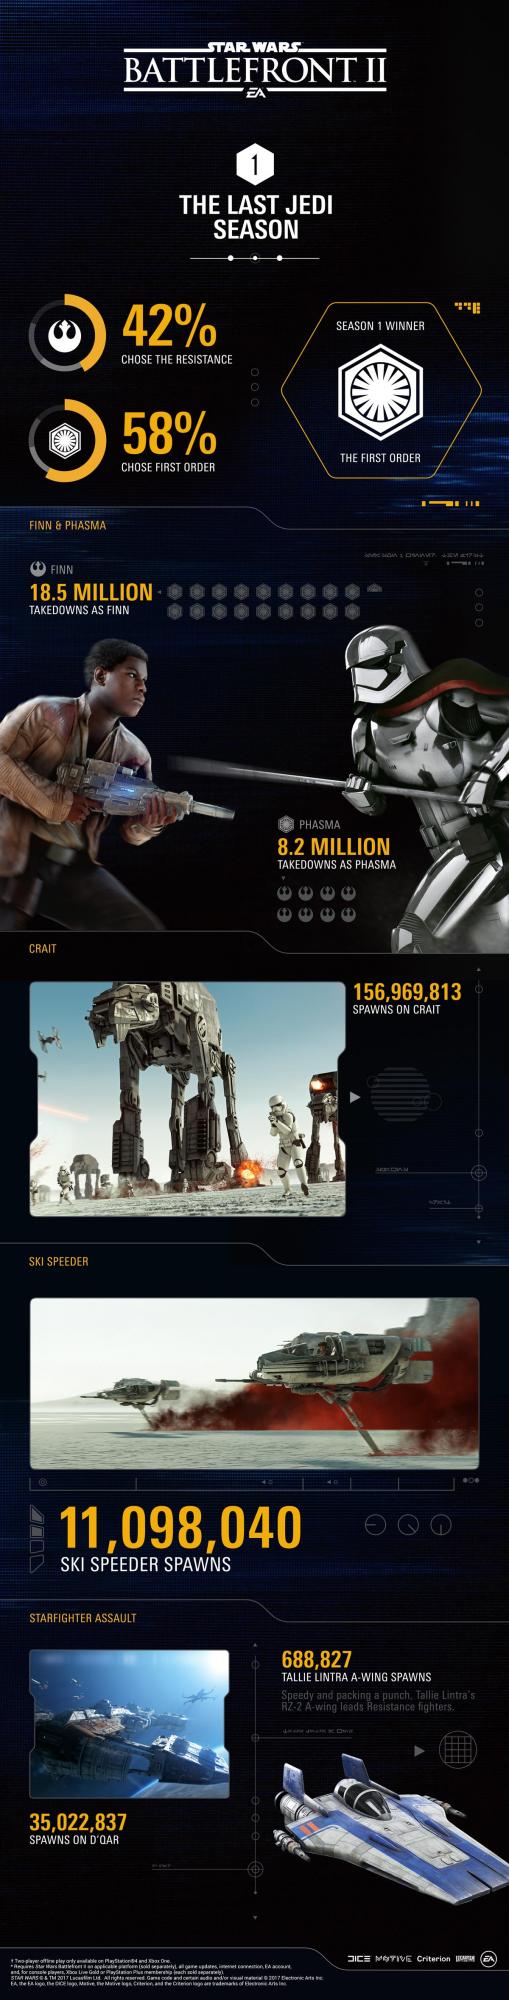 star-wars-battlefront-2-infographic-the-last-jedi-season.jpg